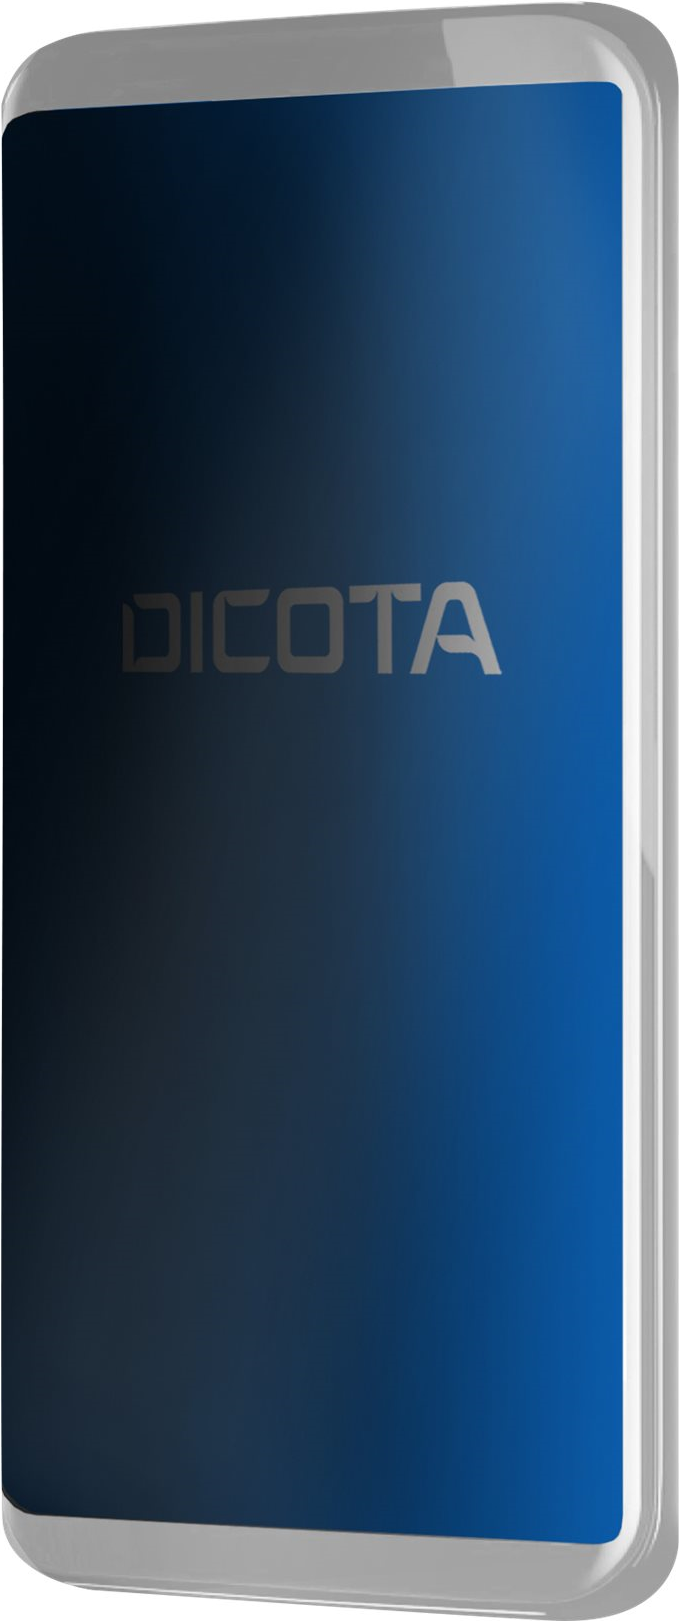 DICOTA Bildschirmschutz für Handy (D70454)